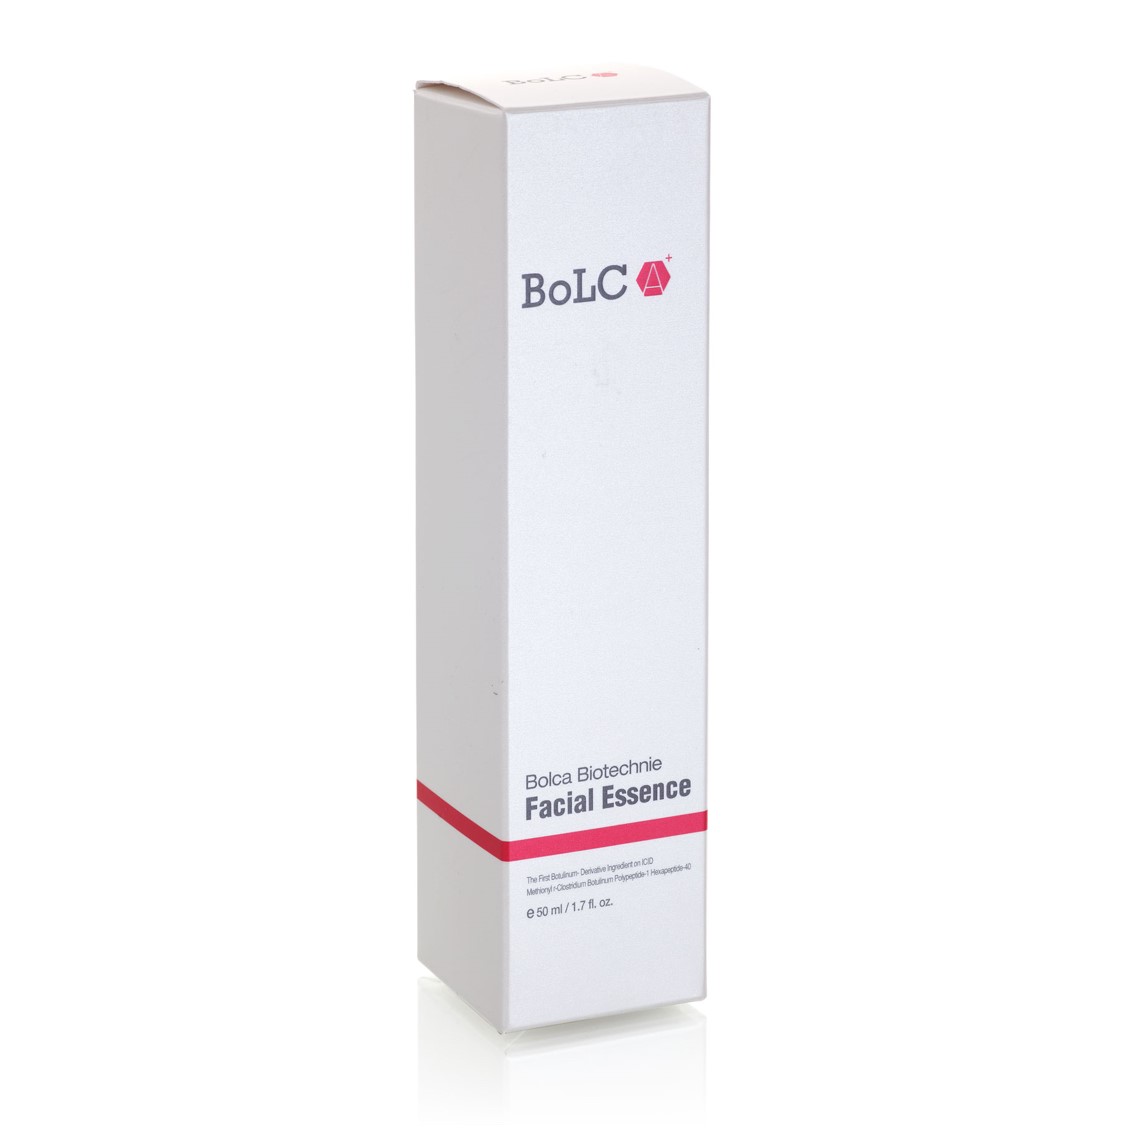  BoLCA Biotechnie Facial Essence 